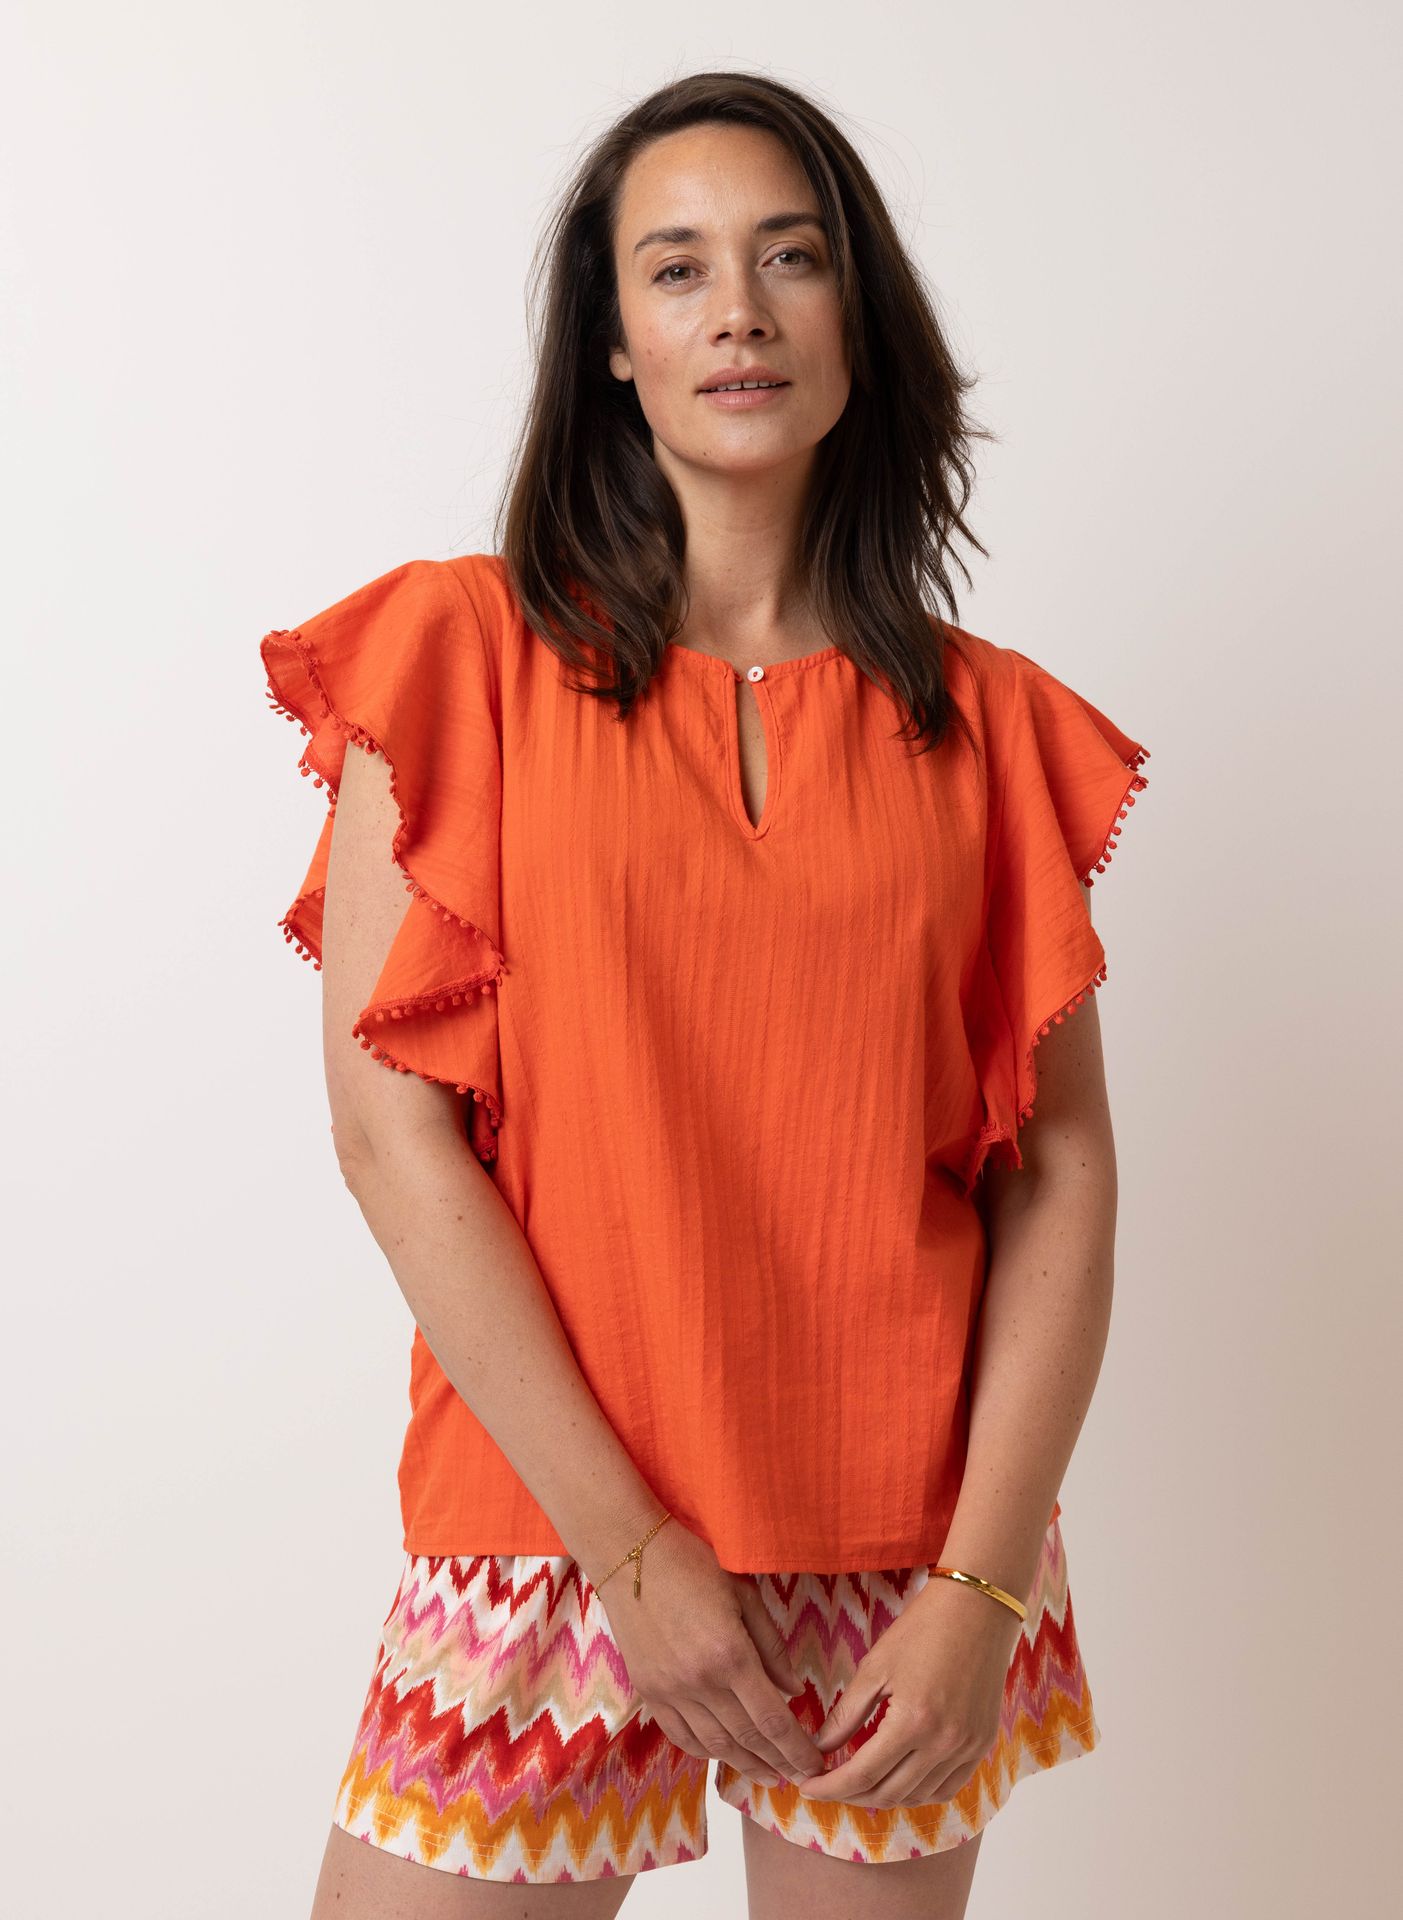 Norah Oranje blouse tomato 214832-668